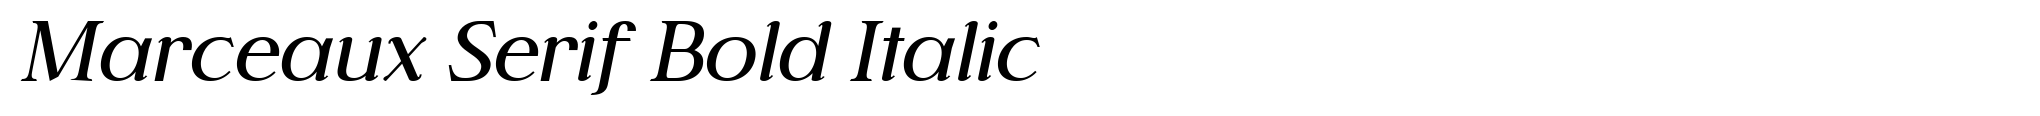 Marceaux Serif Bold Italic image